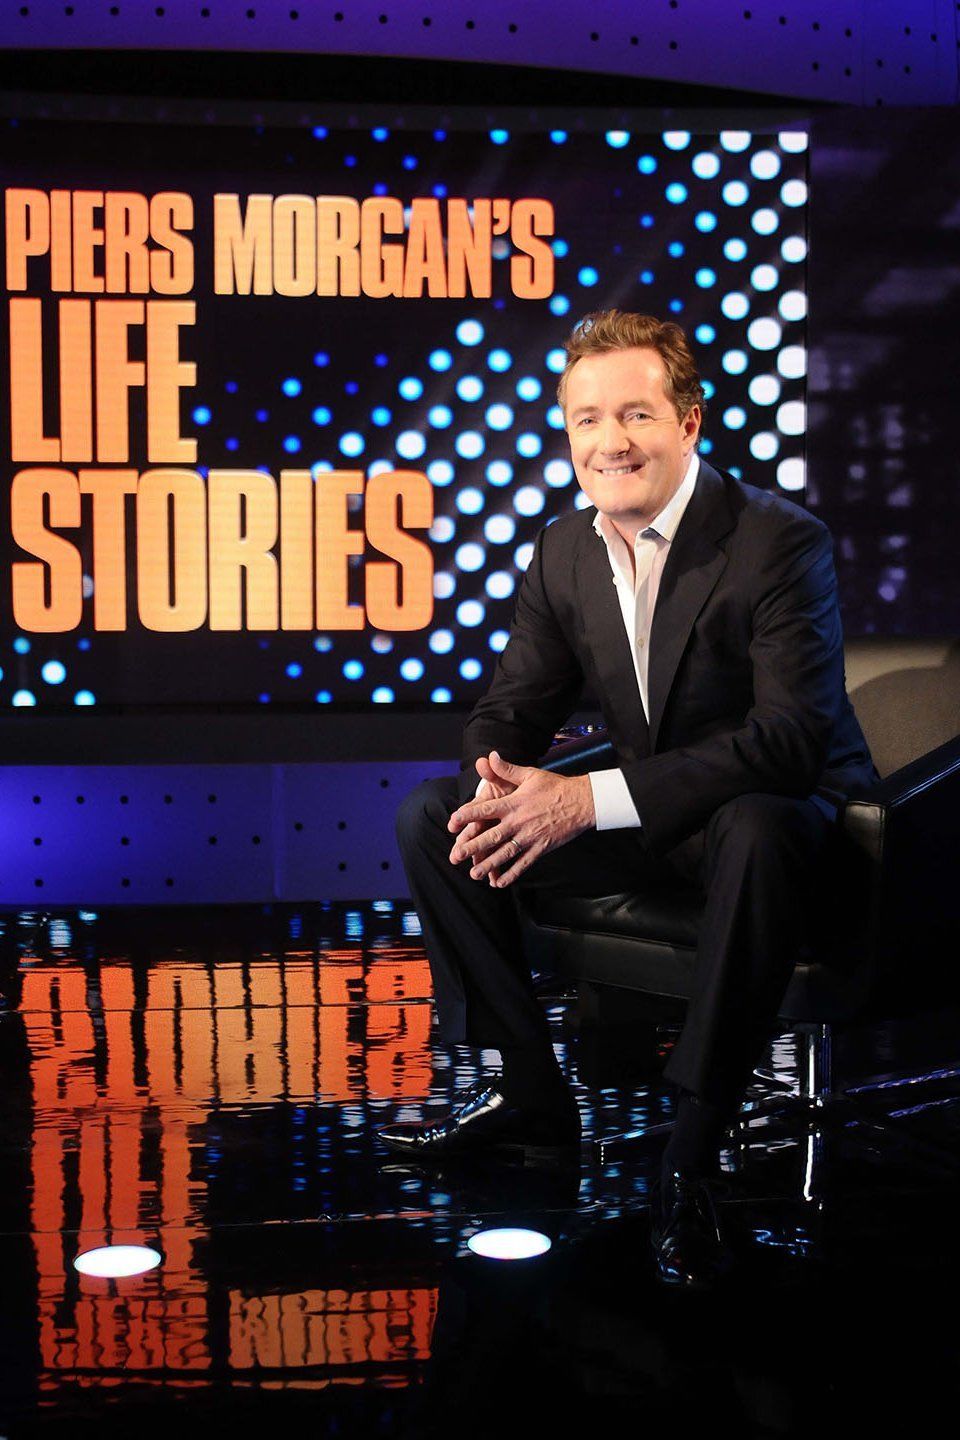 Piers Morgan's Life Stories ne zaman